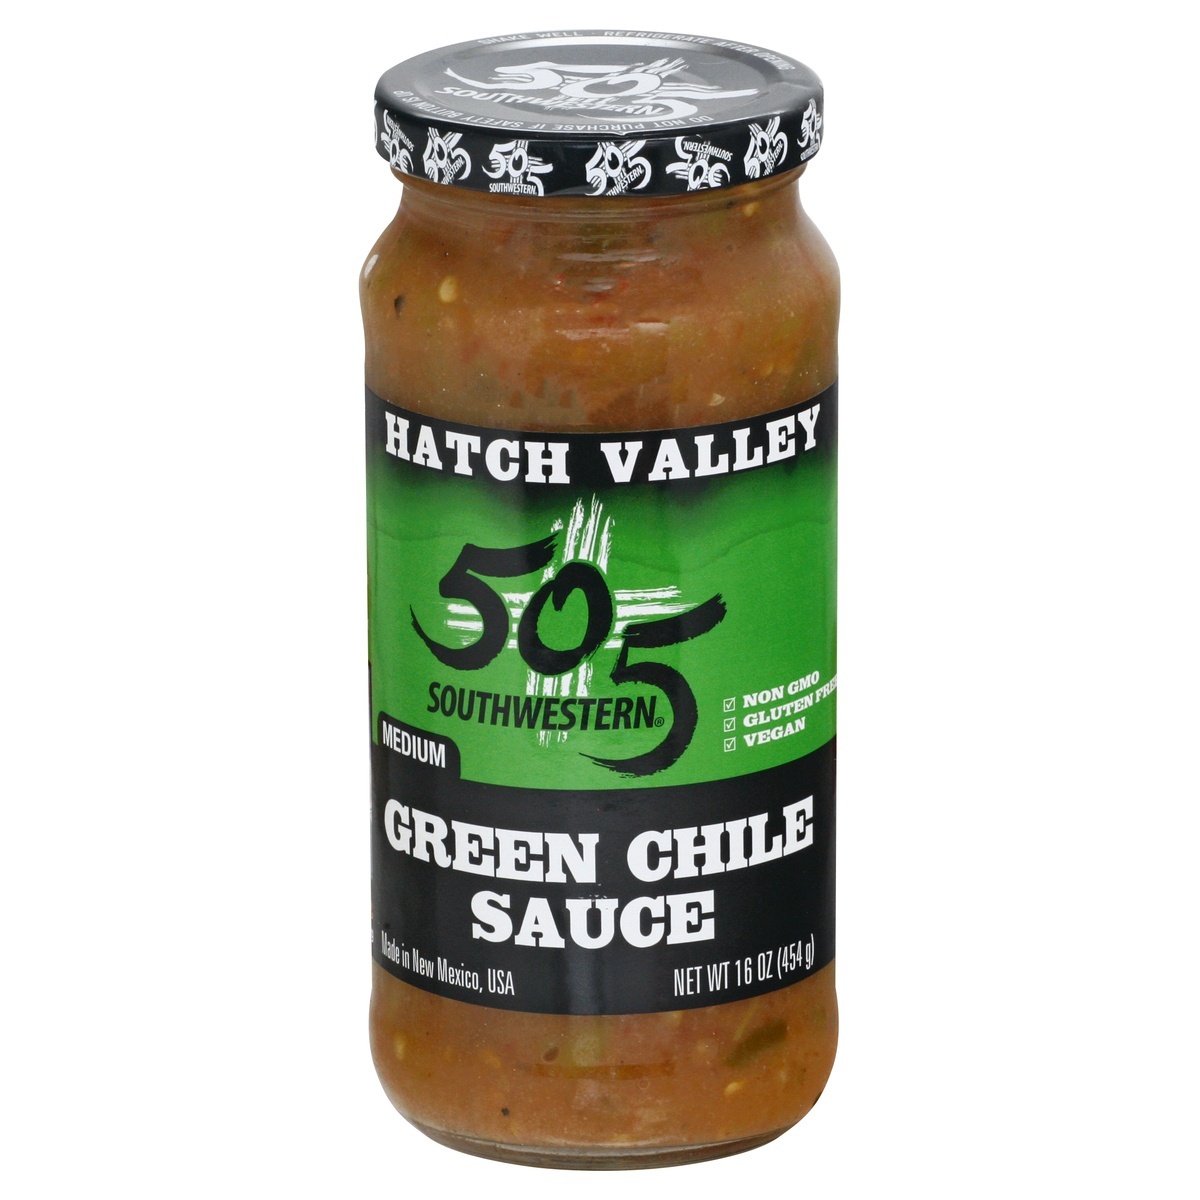 slide 1 of 10, 505 Southwestern Medium Hatch Valley Green Chile Sauce, 16 oz